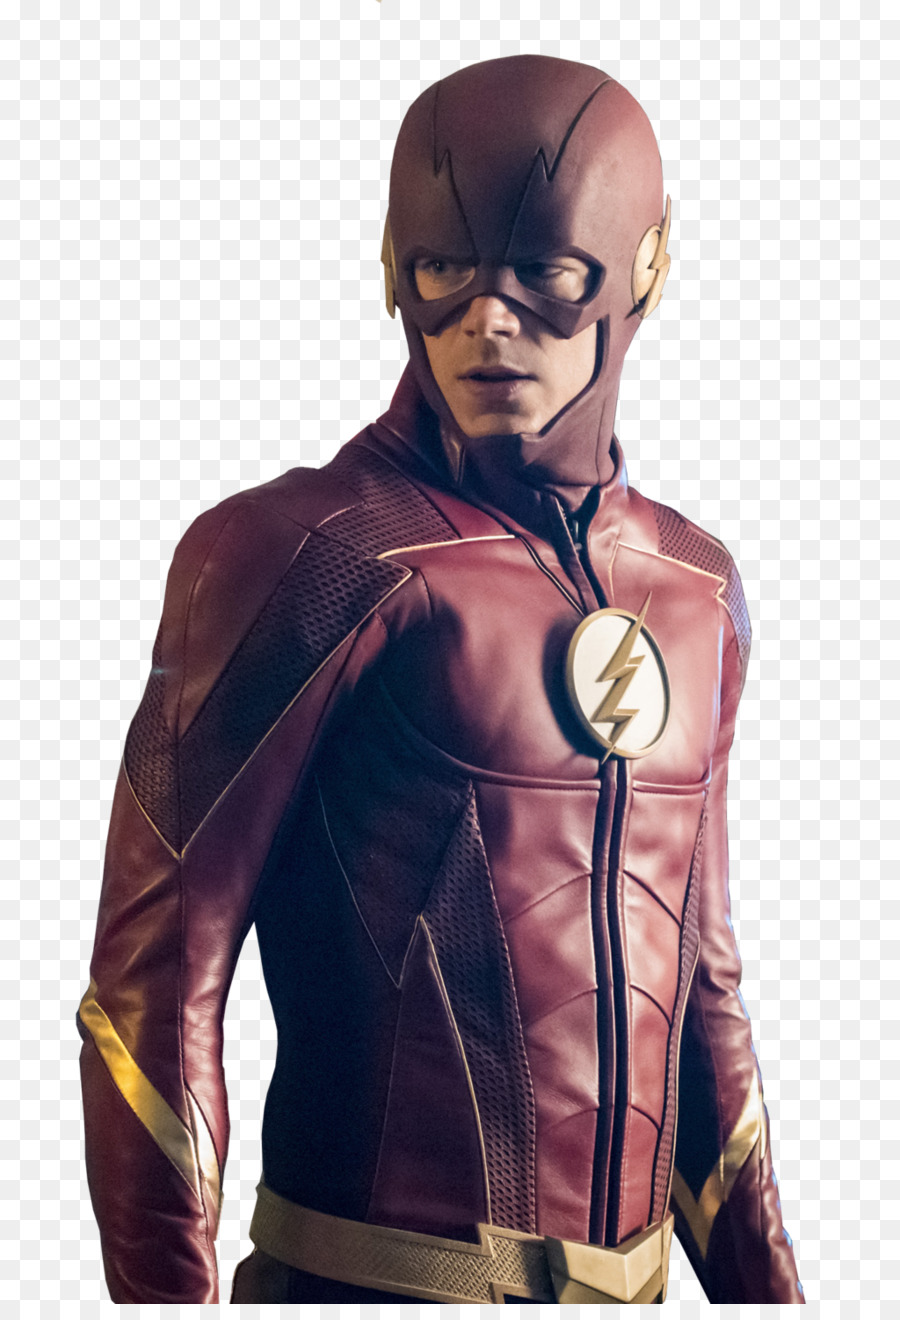 The Flash - Season 4 Episode The Flash Reborn Mixed Signals - seasons png download - 1024*1484 - Free Transparent Flash png Download.